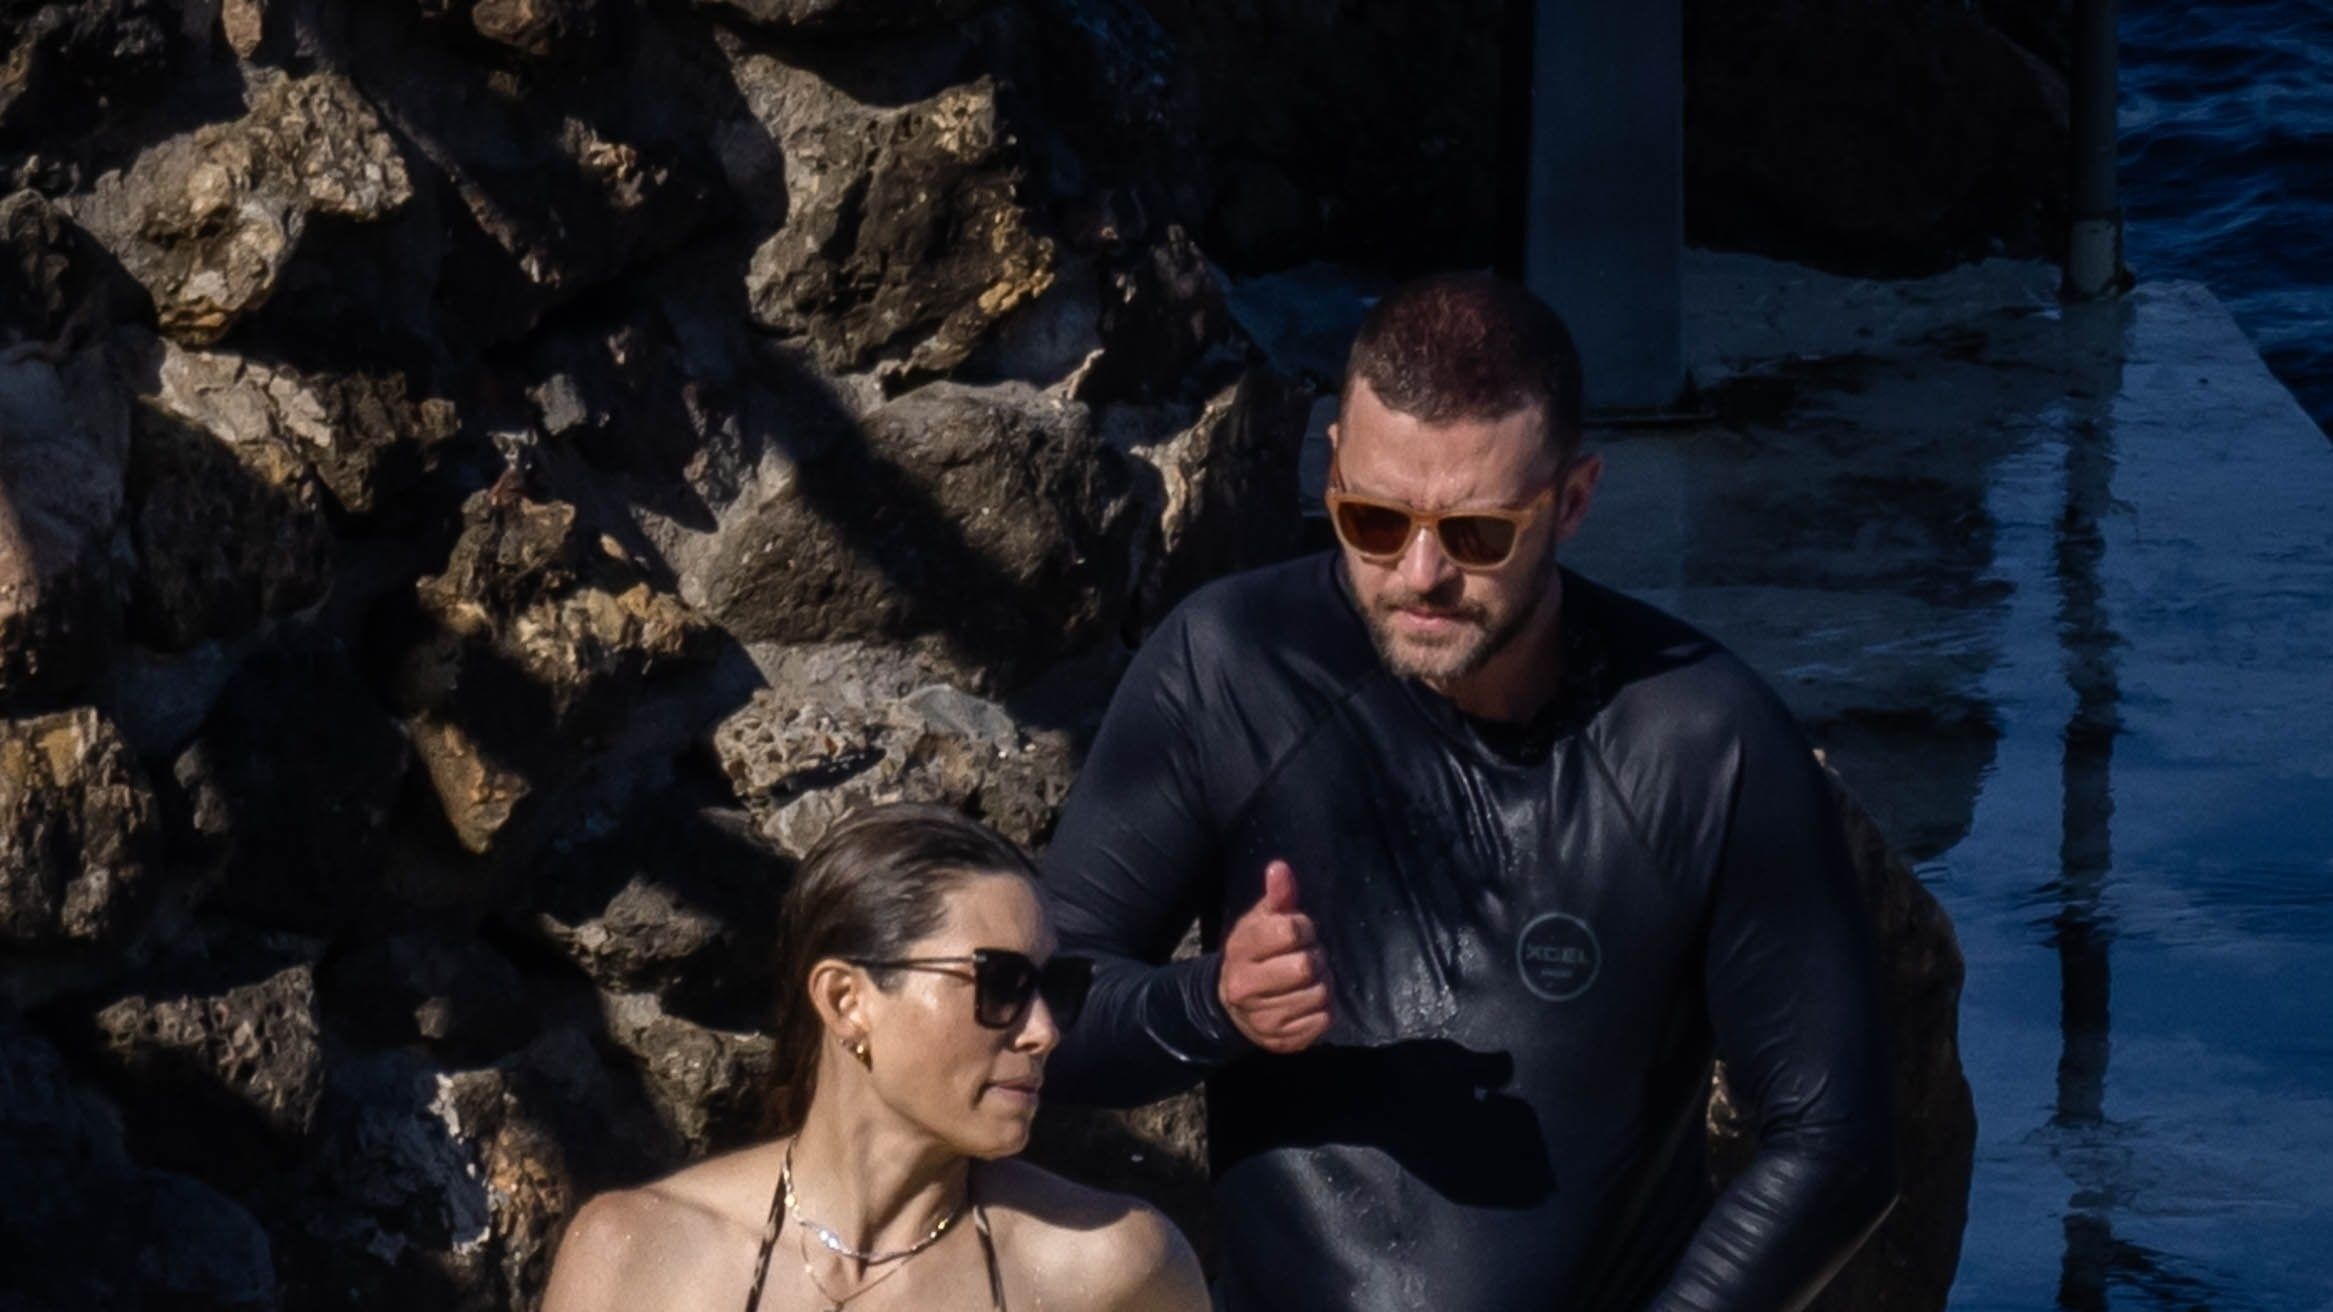 Jessica Biel Rocks Bikini, Kisses Justin Timberlake in Italy